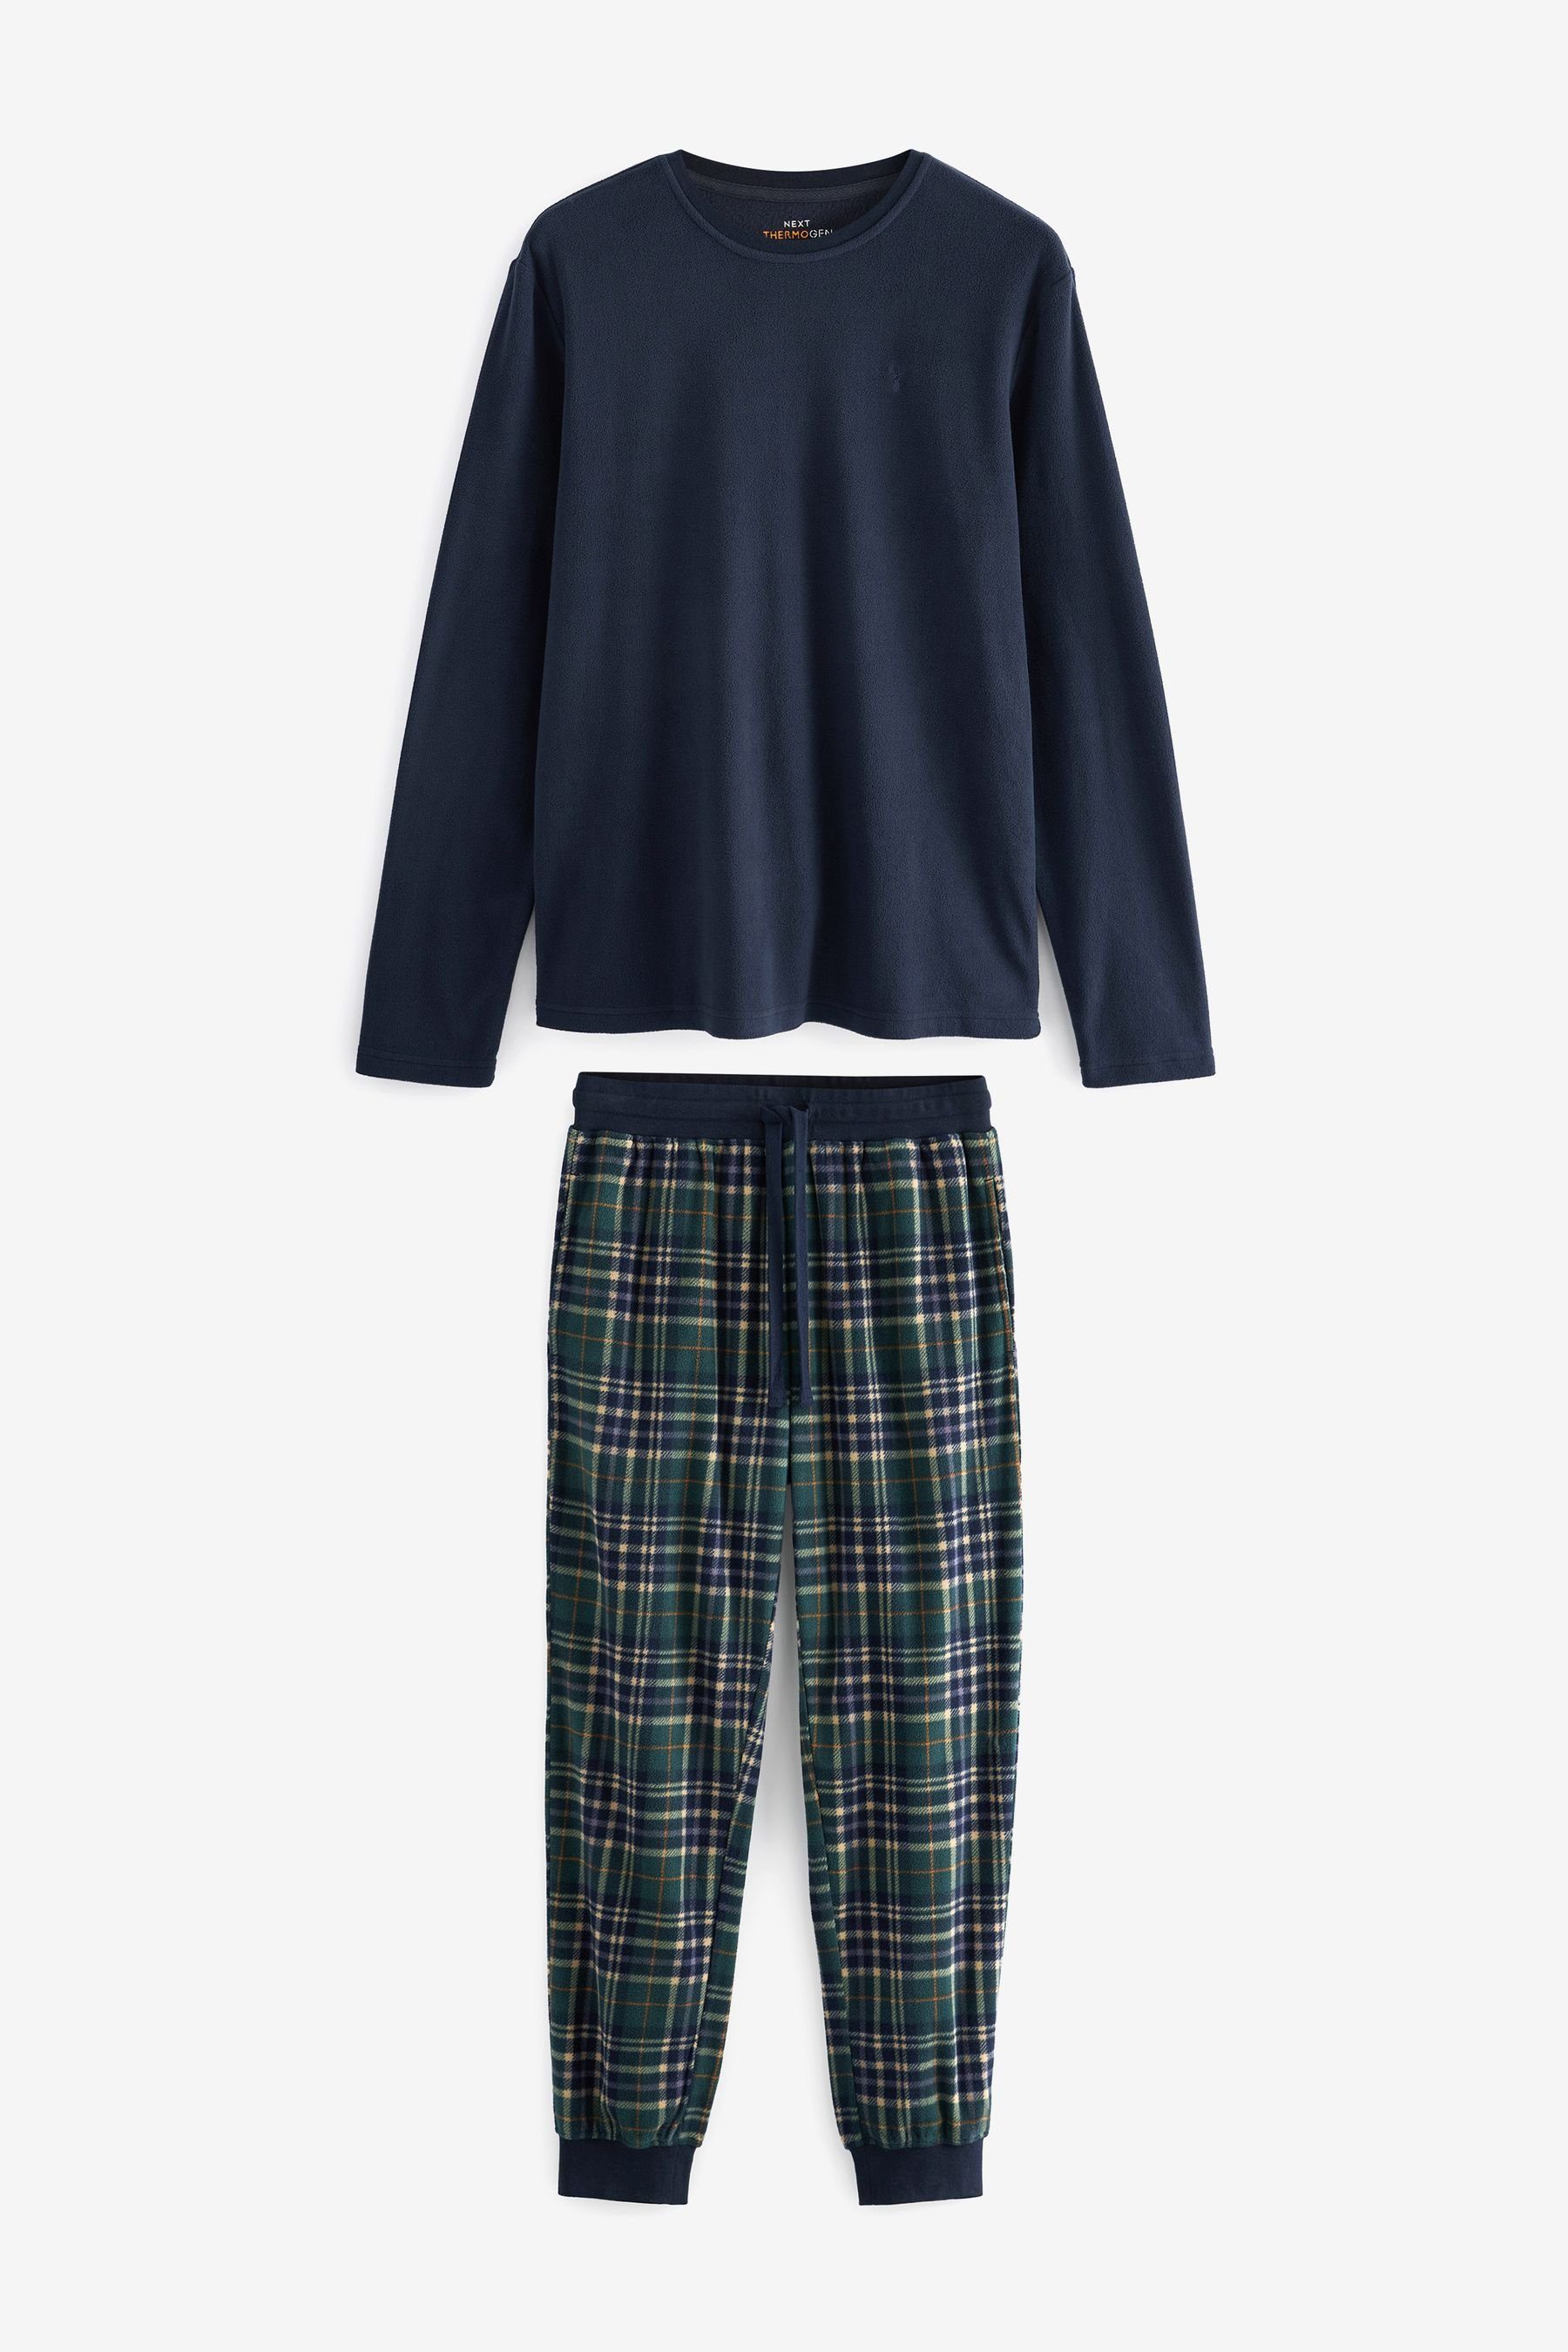 Next Pyjama Thermo-Schlafanzug (2 tlg) Black/Green Check